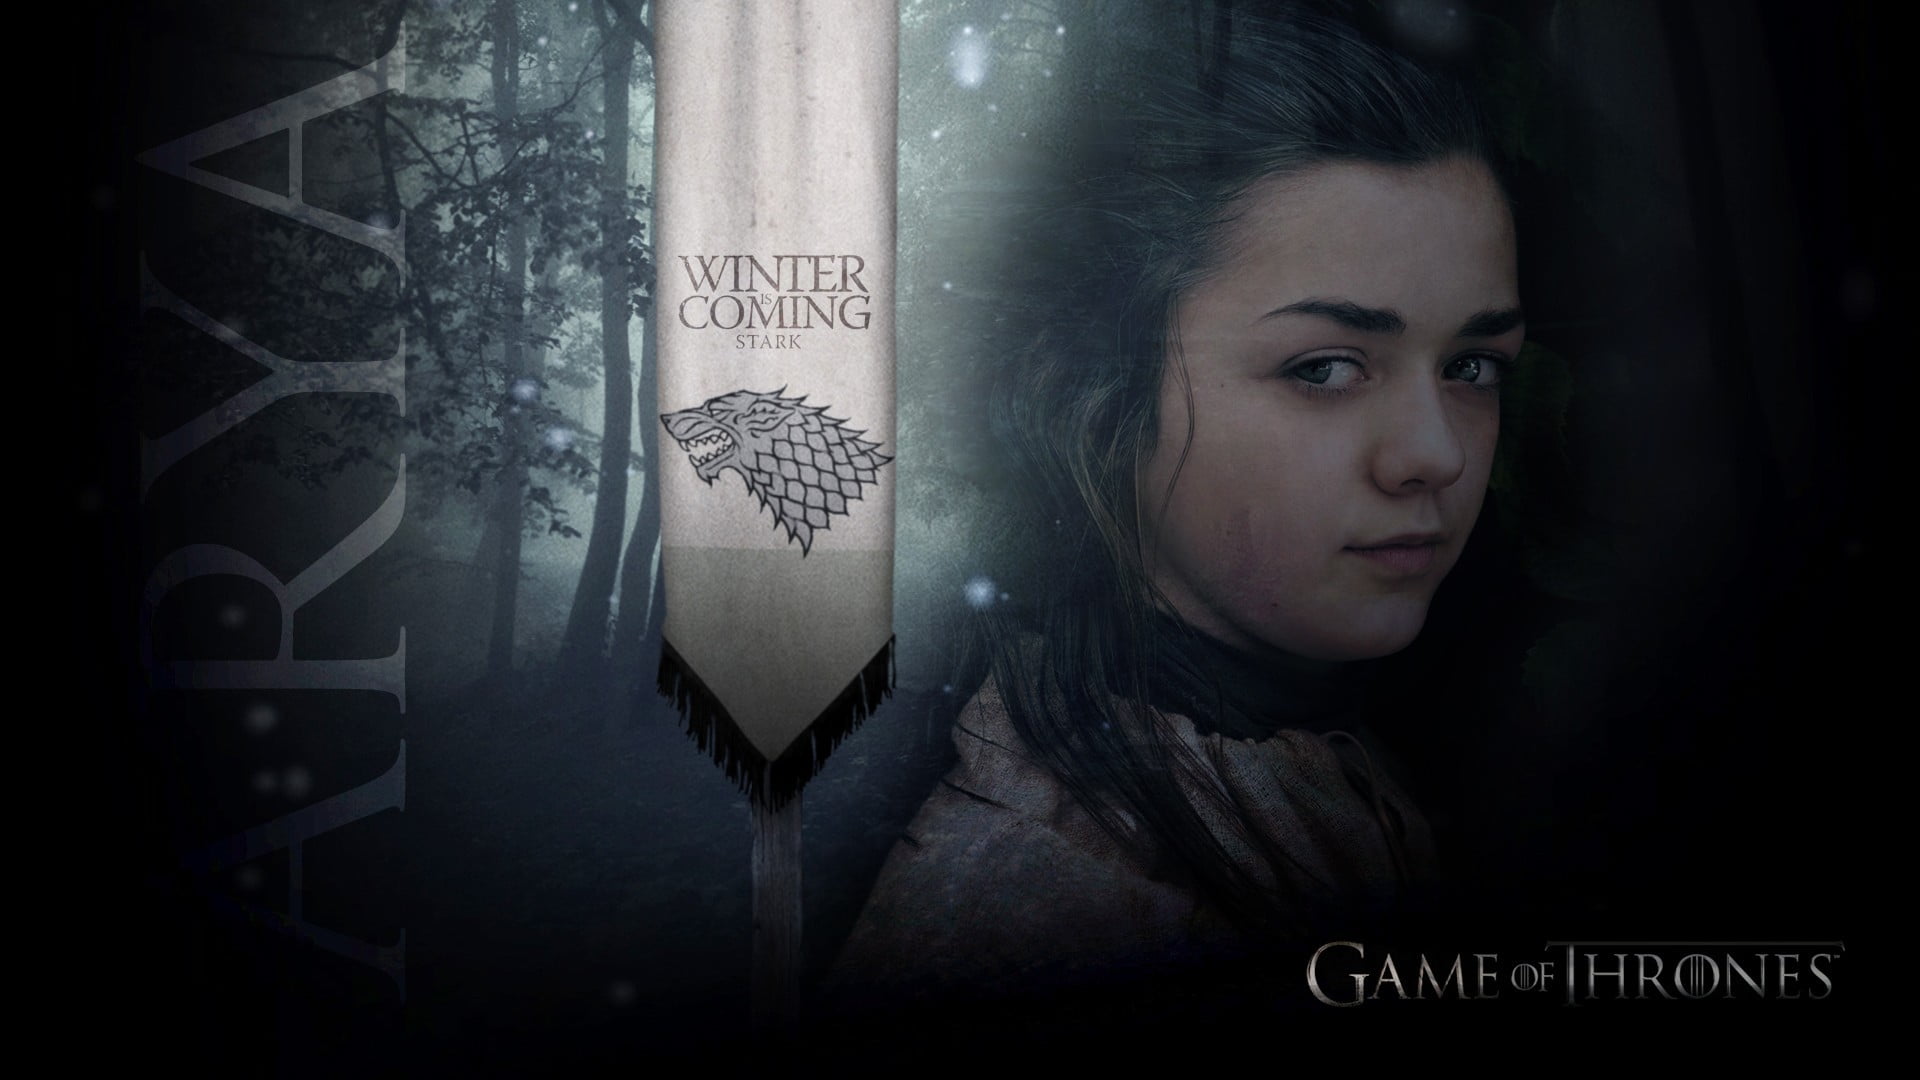 Game of Thrones Winter Coming digital wallpaper, Arya Stark, Maisie Williams